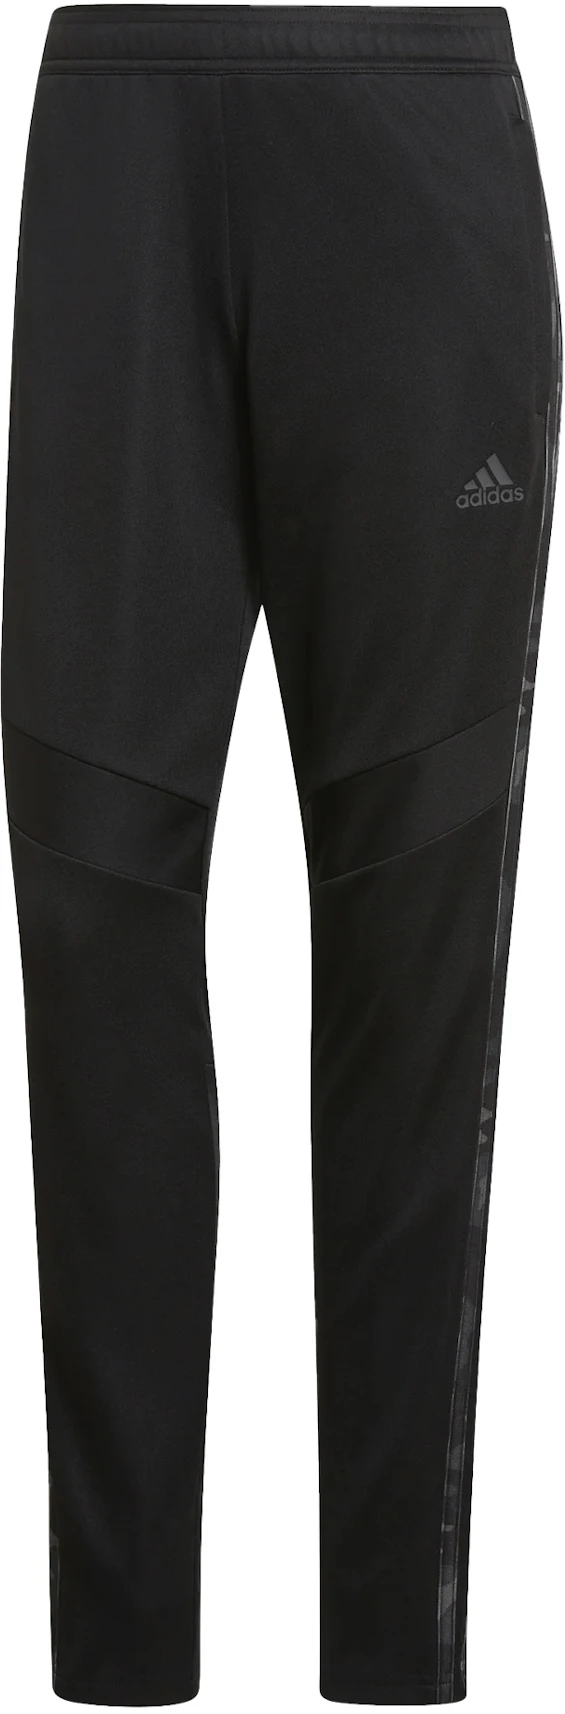 adidas Tiro 19 Training Pants Black/Solid Grey - -